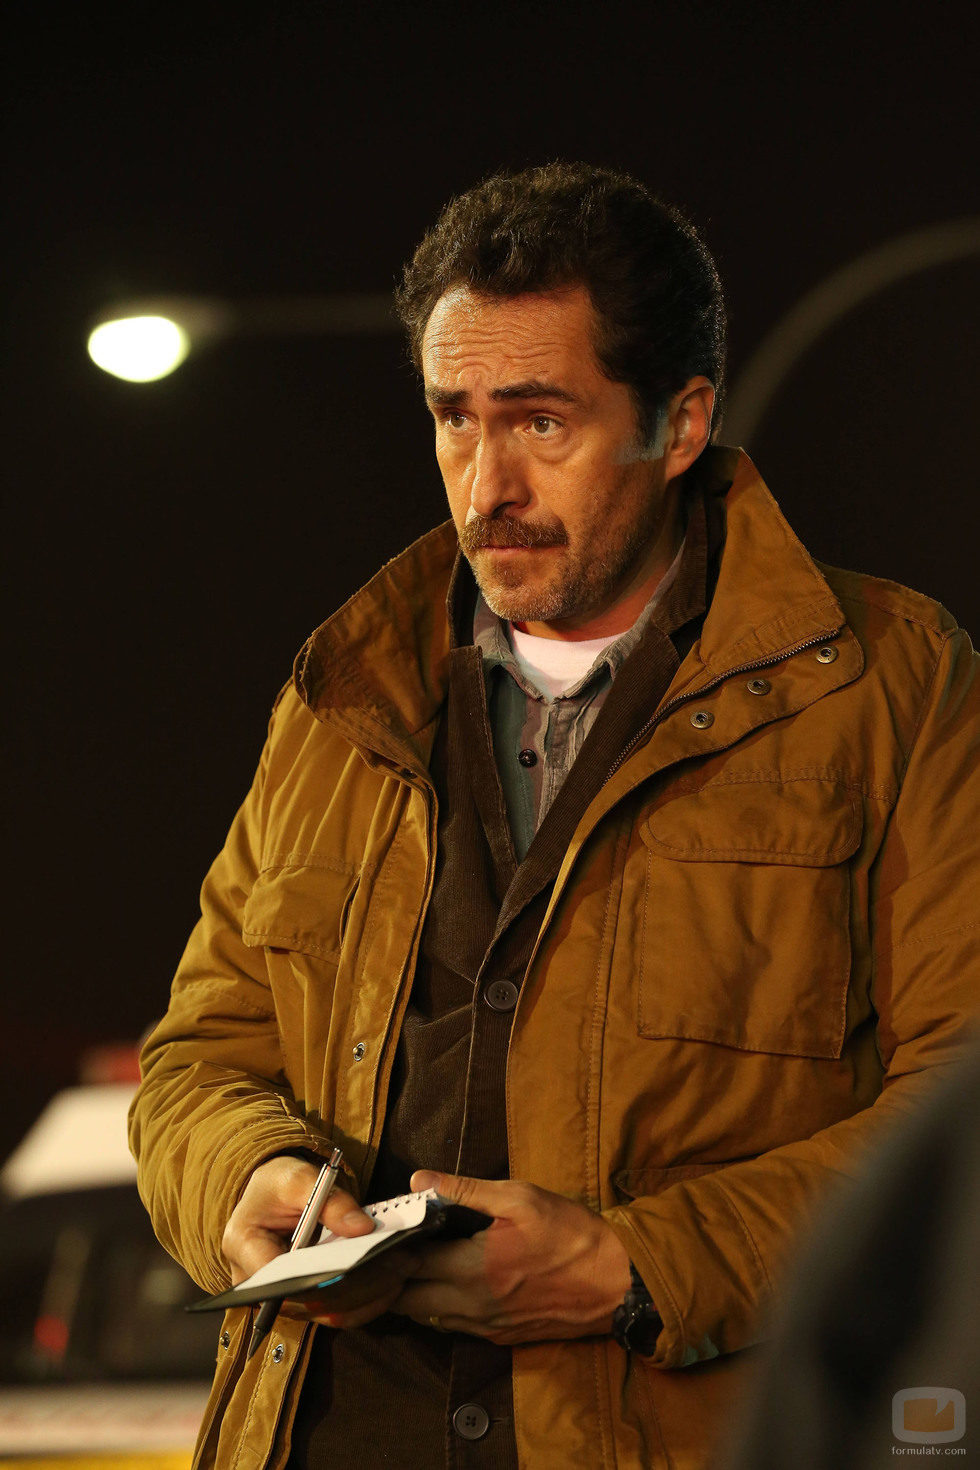 Demián Bichir interpreta al detective Marco Ruiz en 'The Bridge'